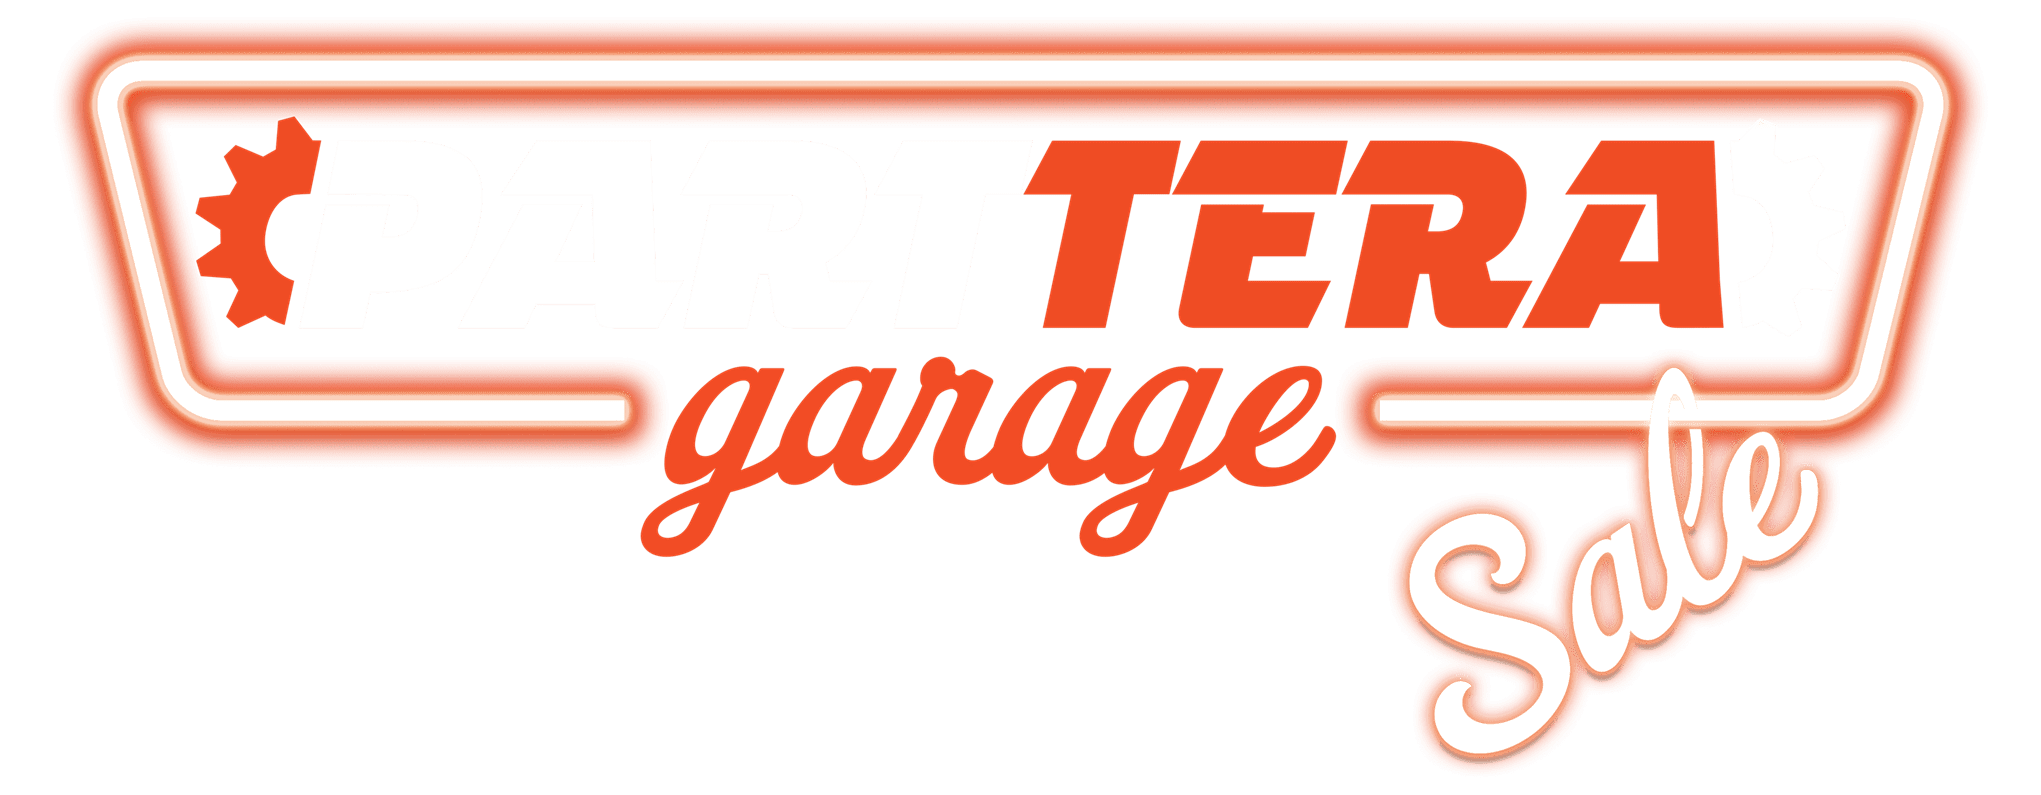 parttera-logo